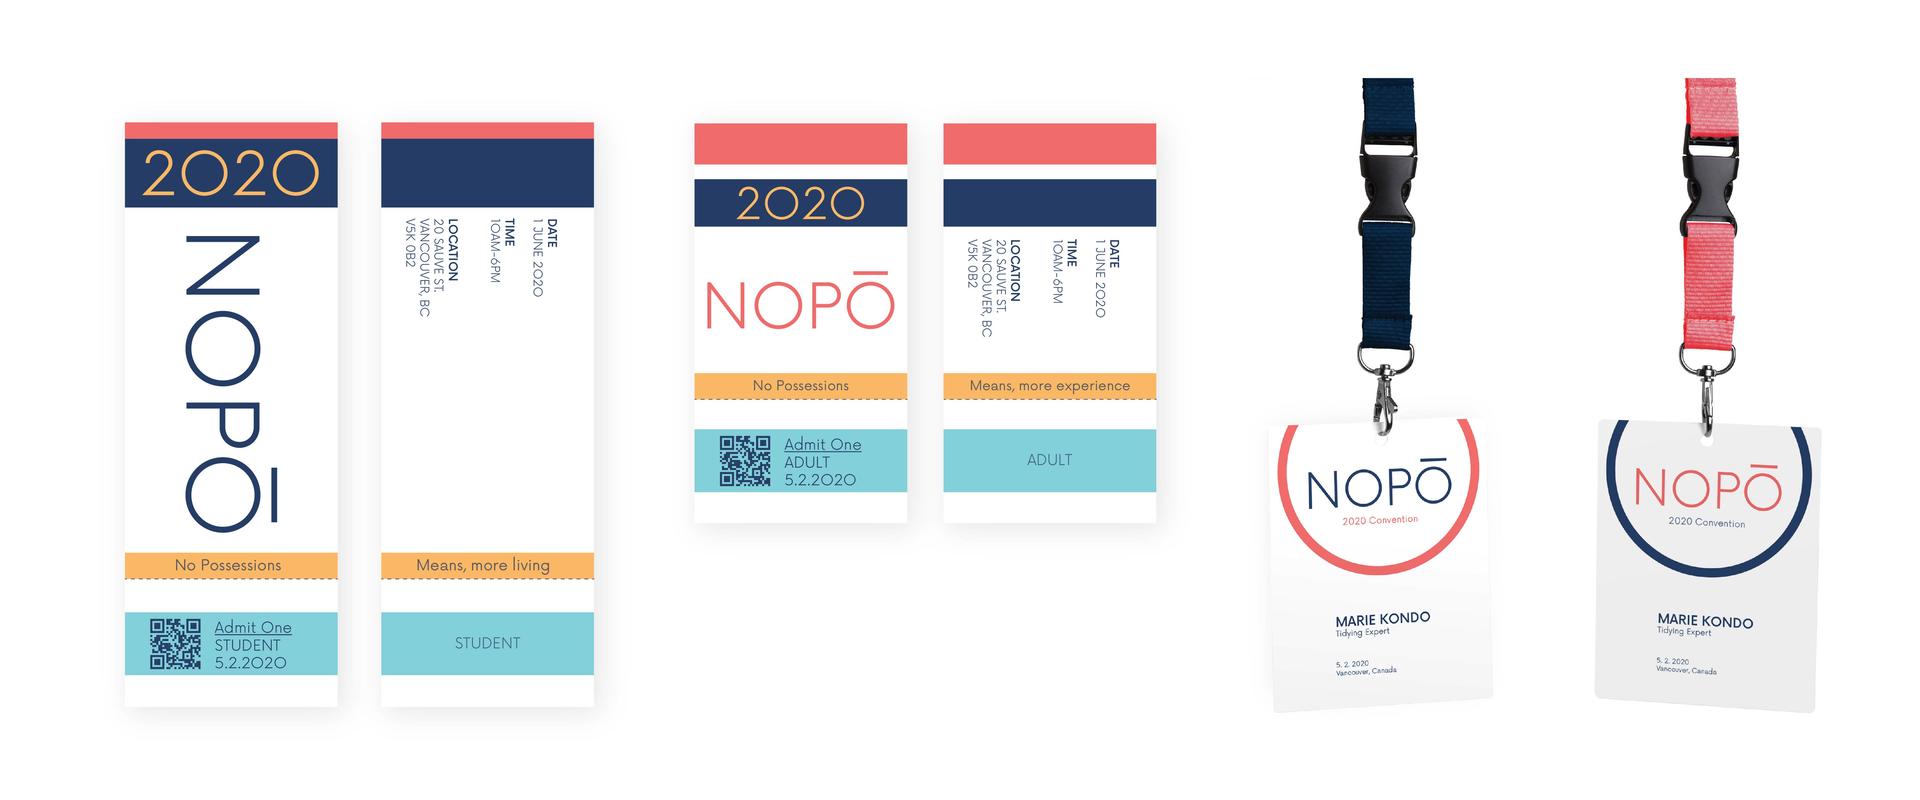 NOPO campaign materials 